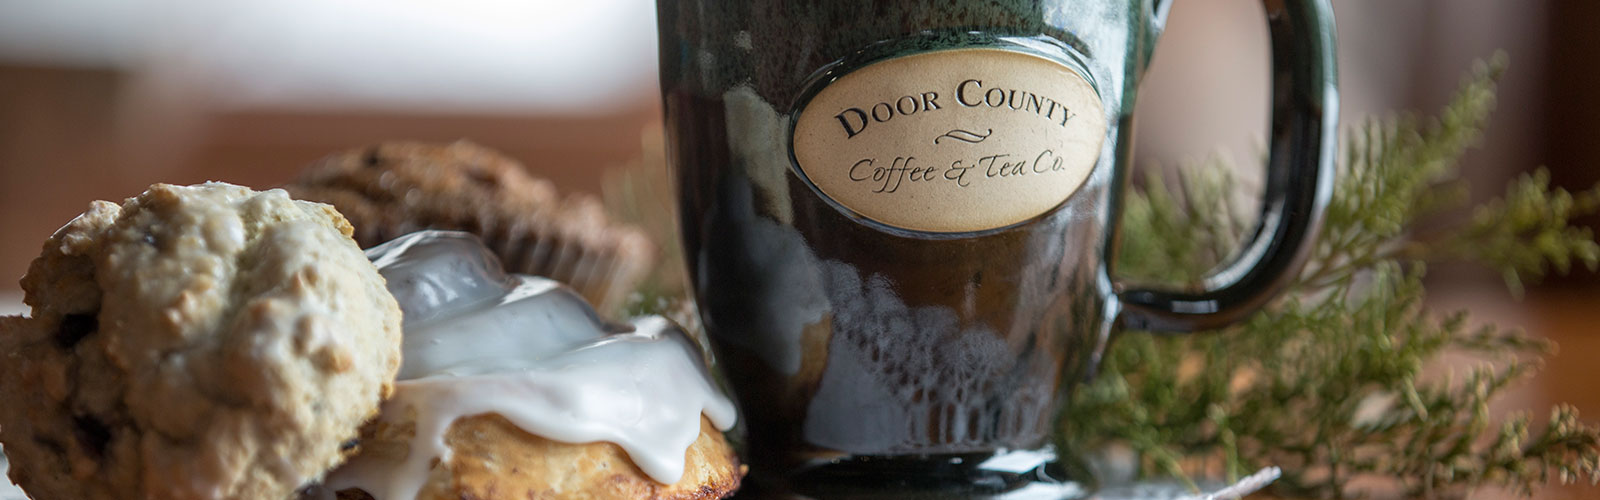 Door County Coffee mug next to some desserts